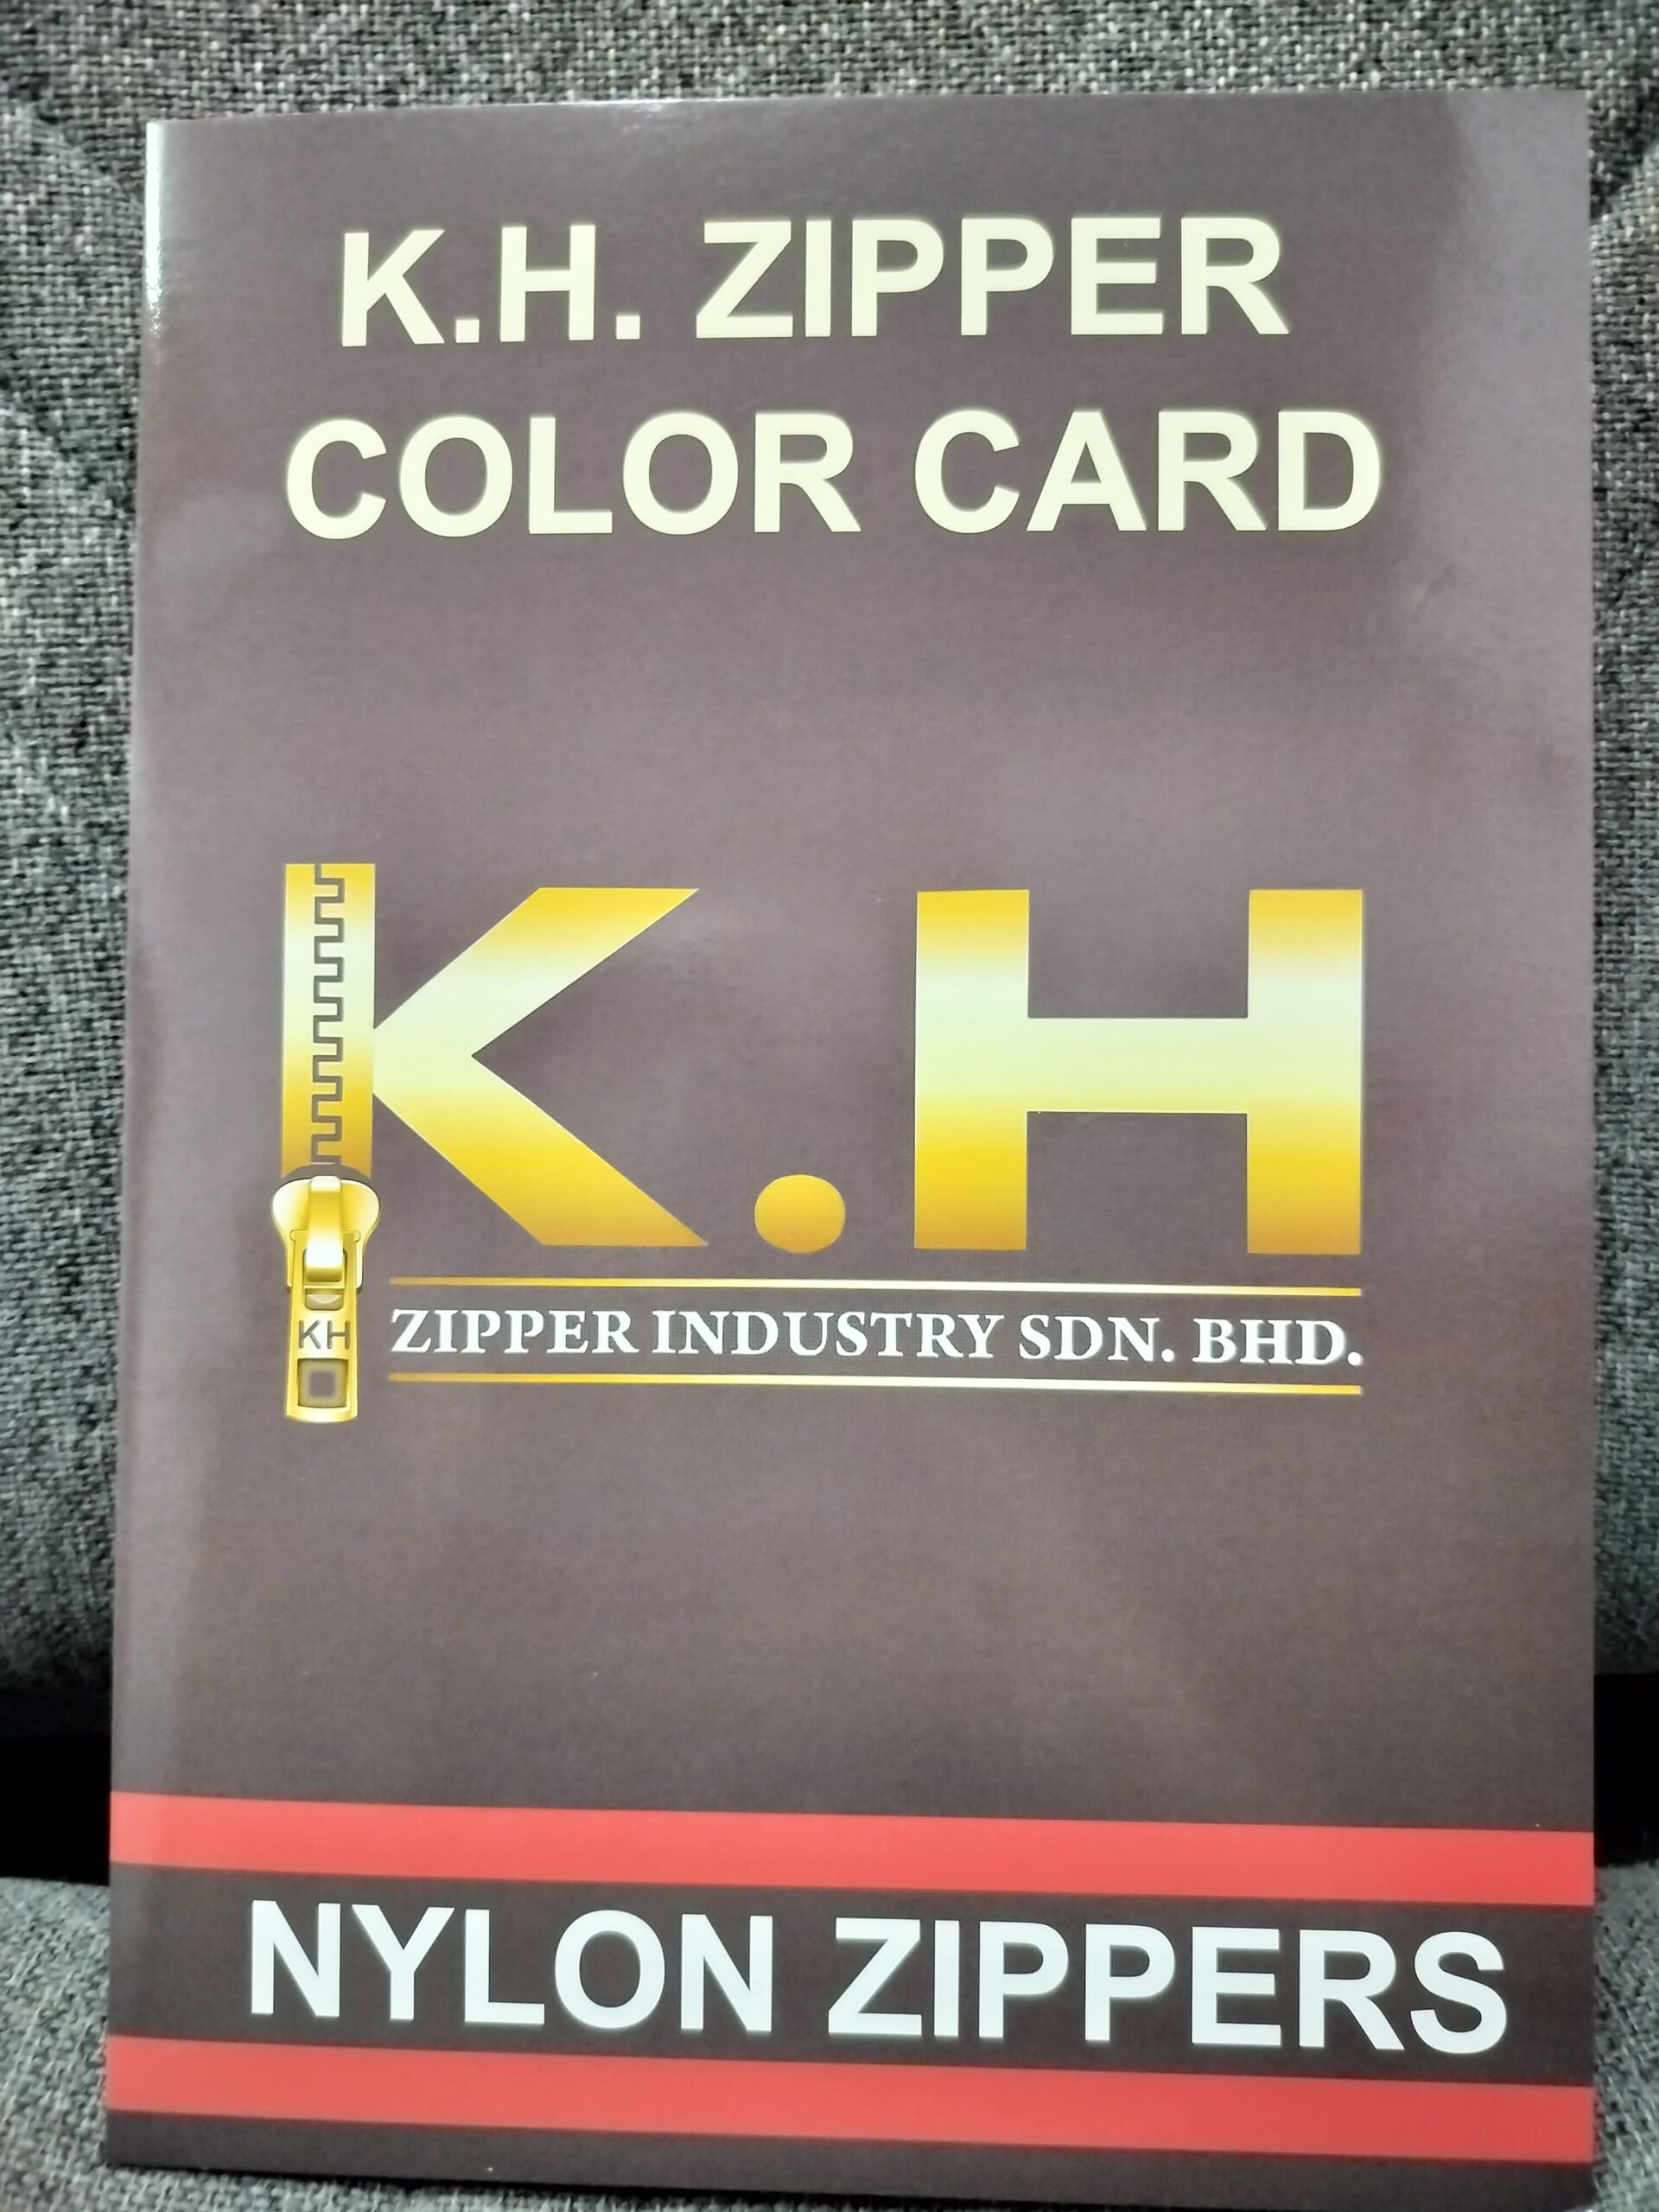 K.H. ZIPPER INDUSTRY SDN. BHD.